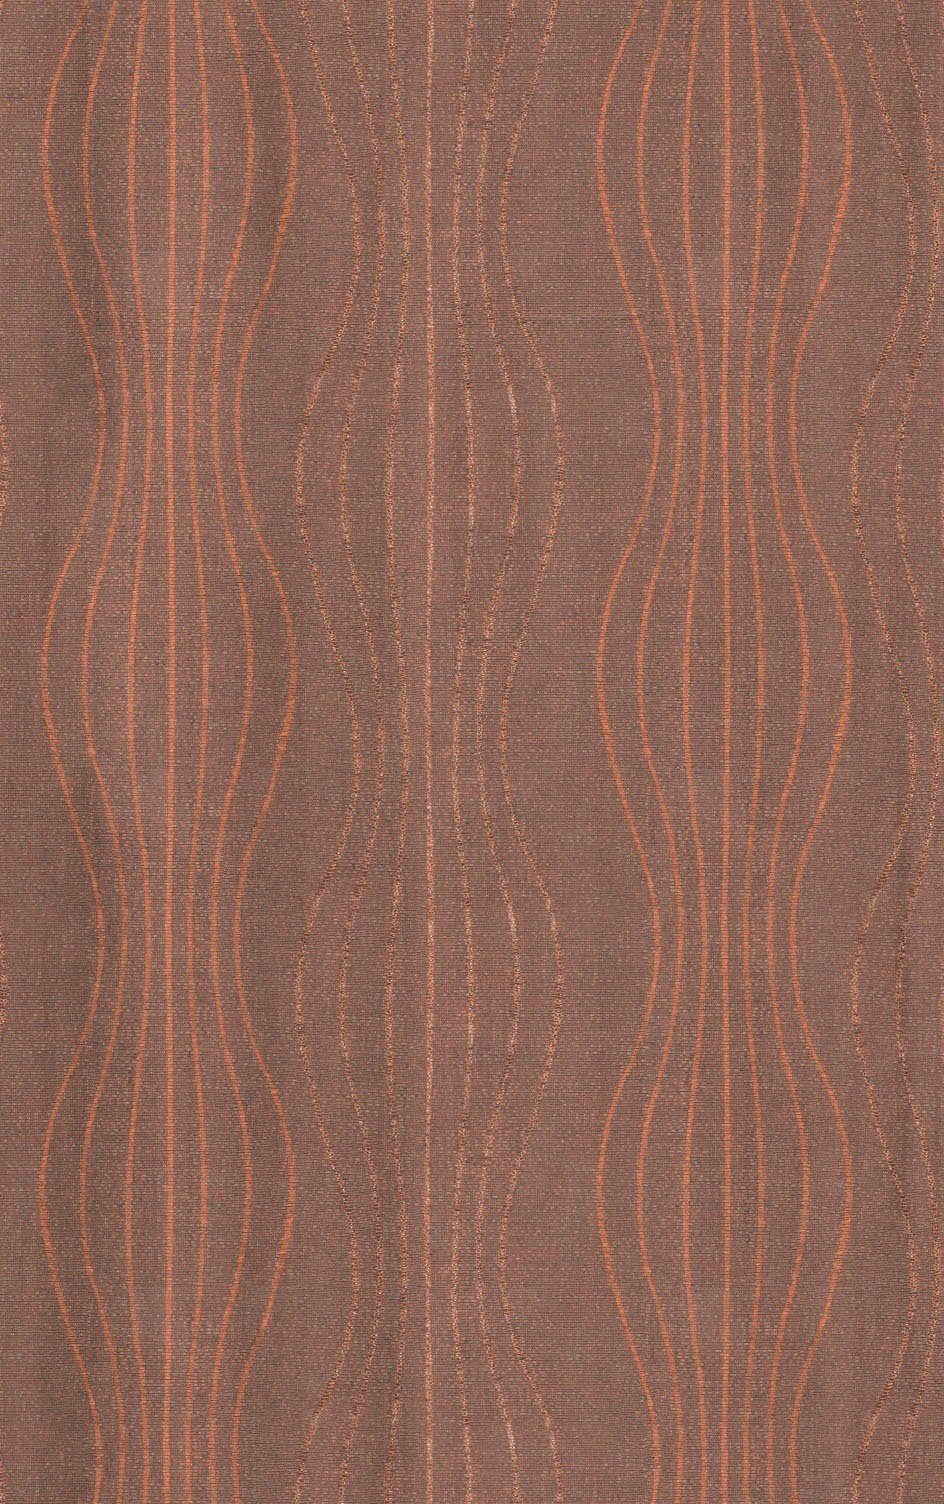 St), Jacquard Vorhang (1 Riccia, Wirth, Multifunktionsband blickdicht, braun/kupferfarben